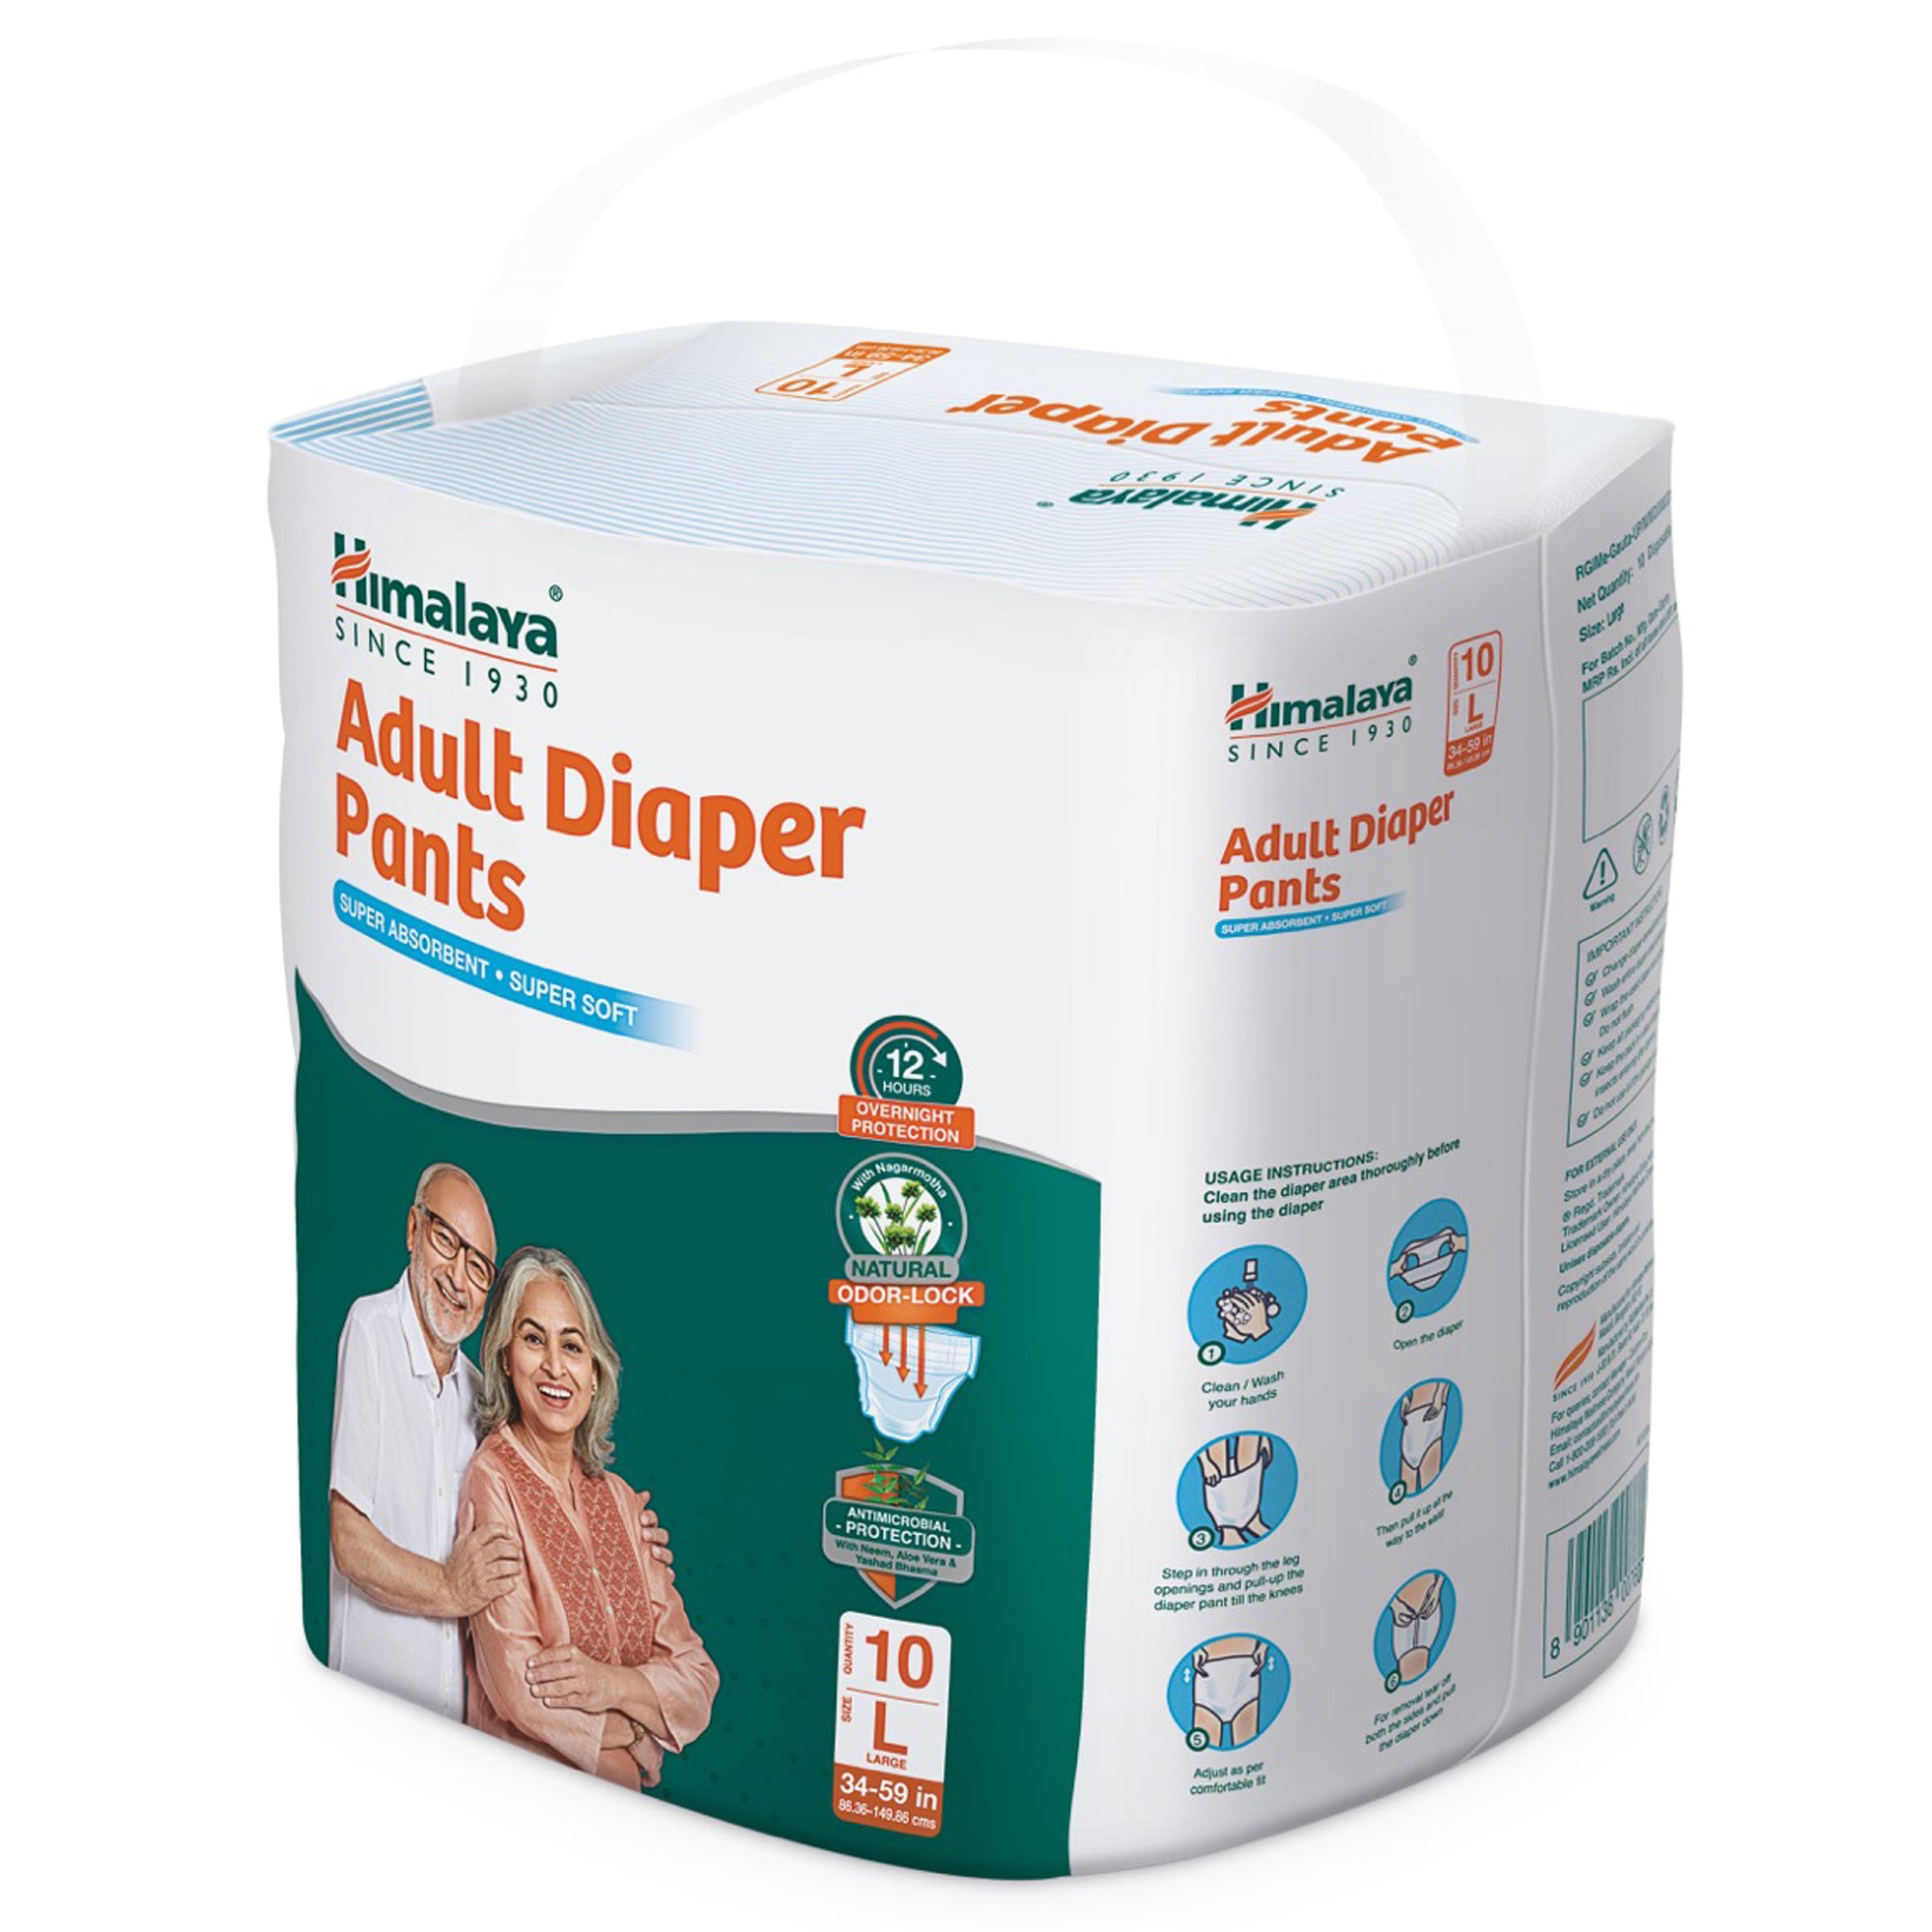 Himalaya Adult Diaper Pants L